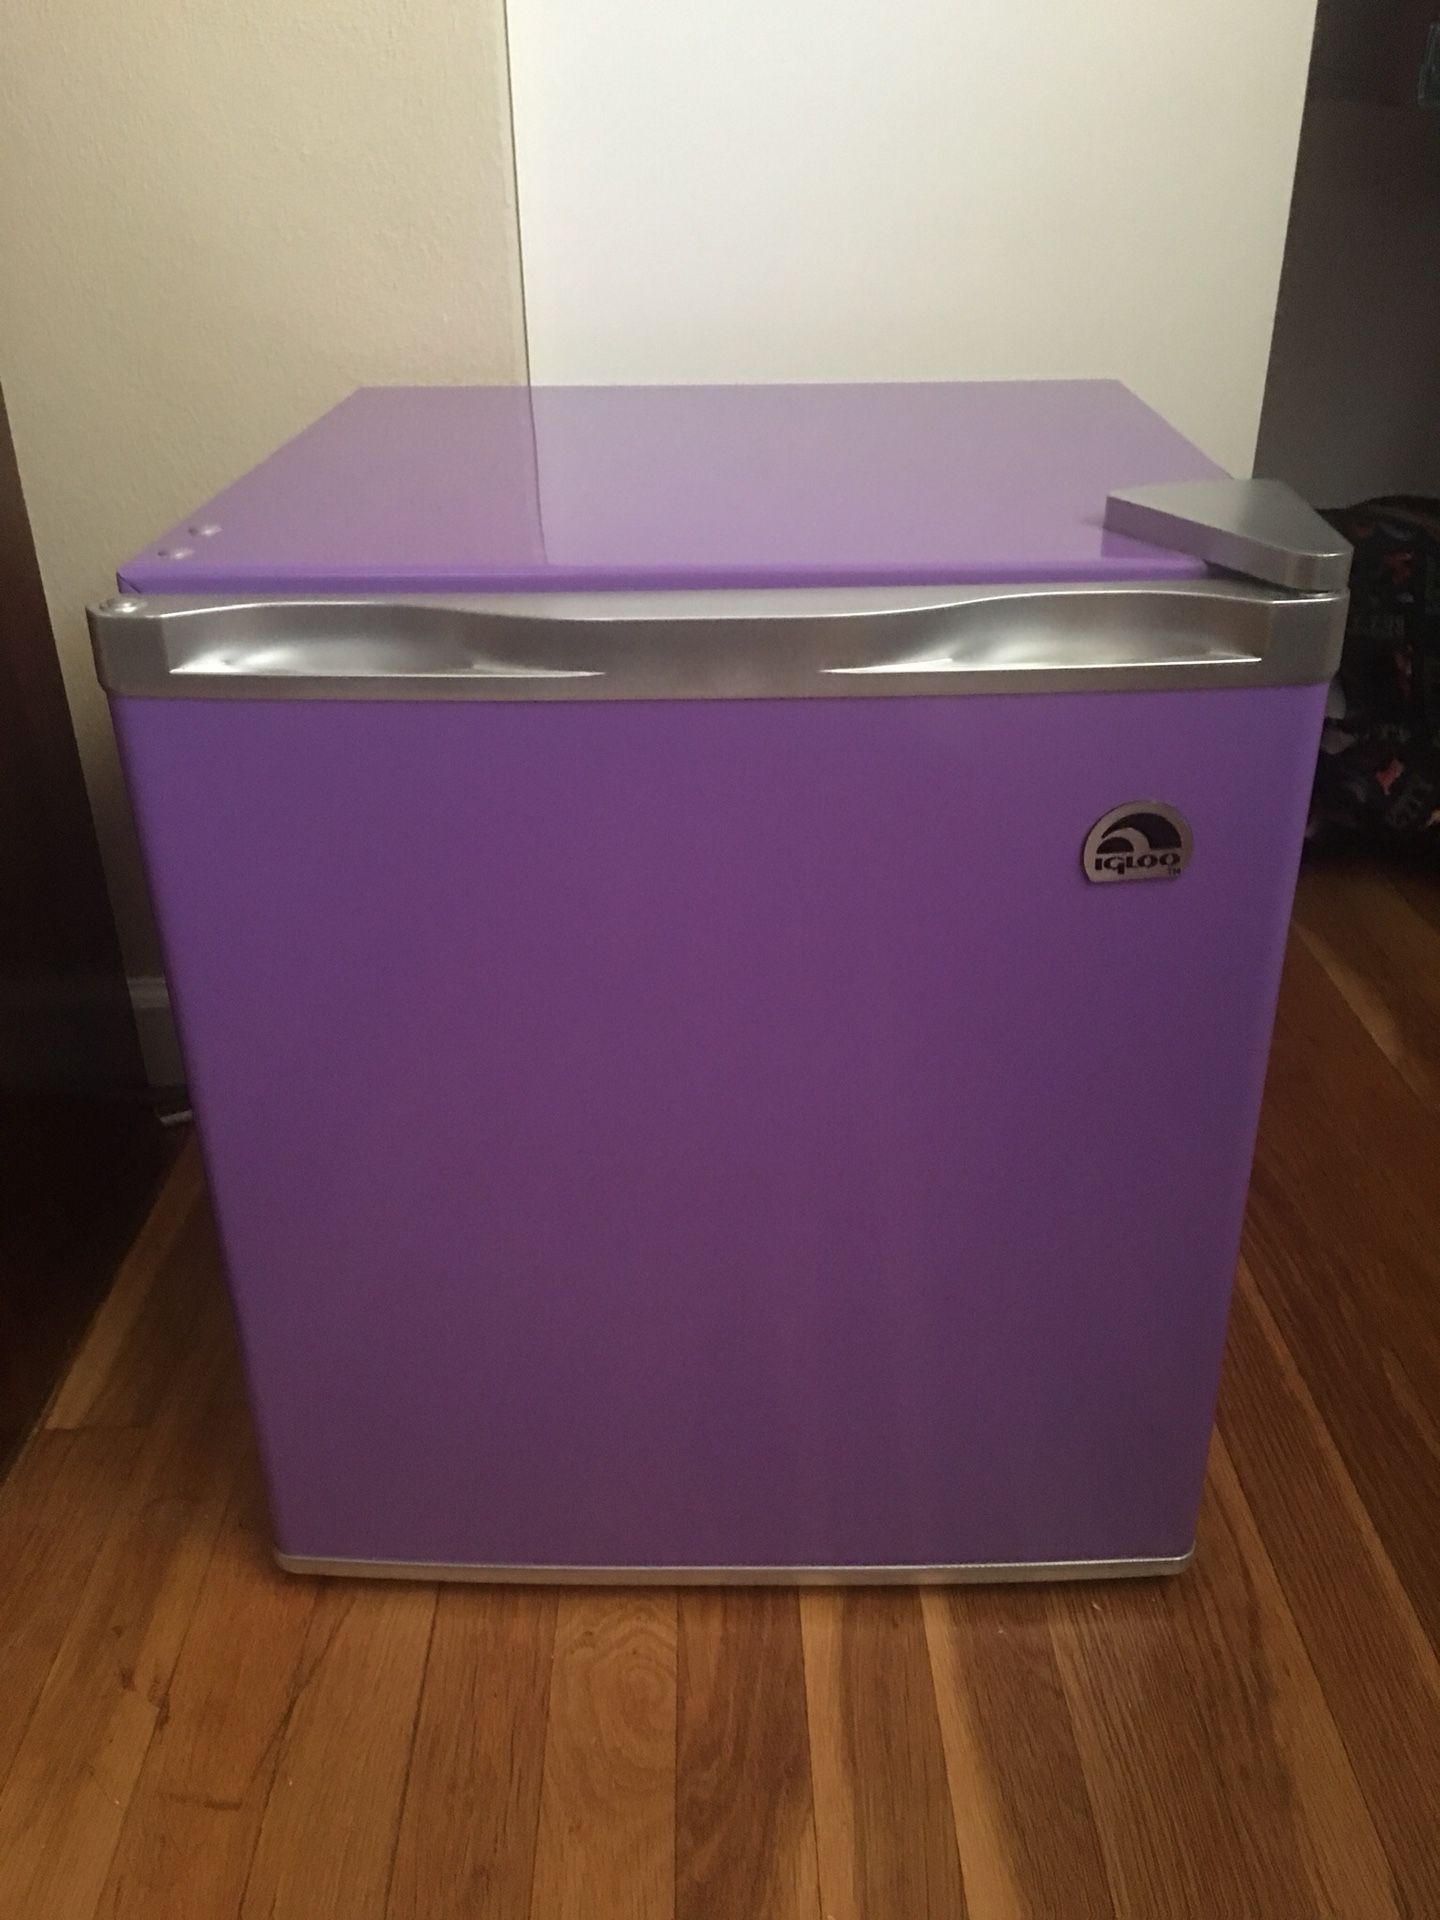 Igloo mini fridge